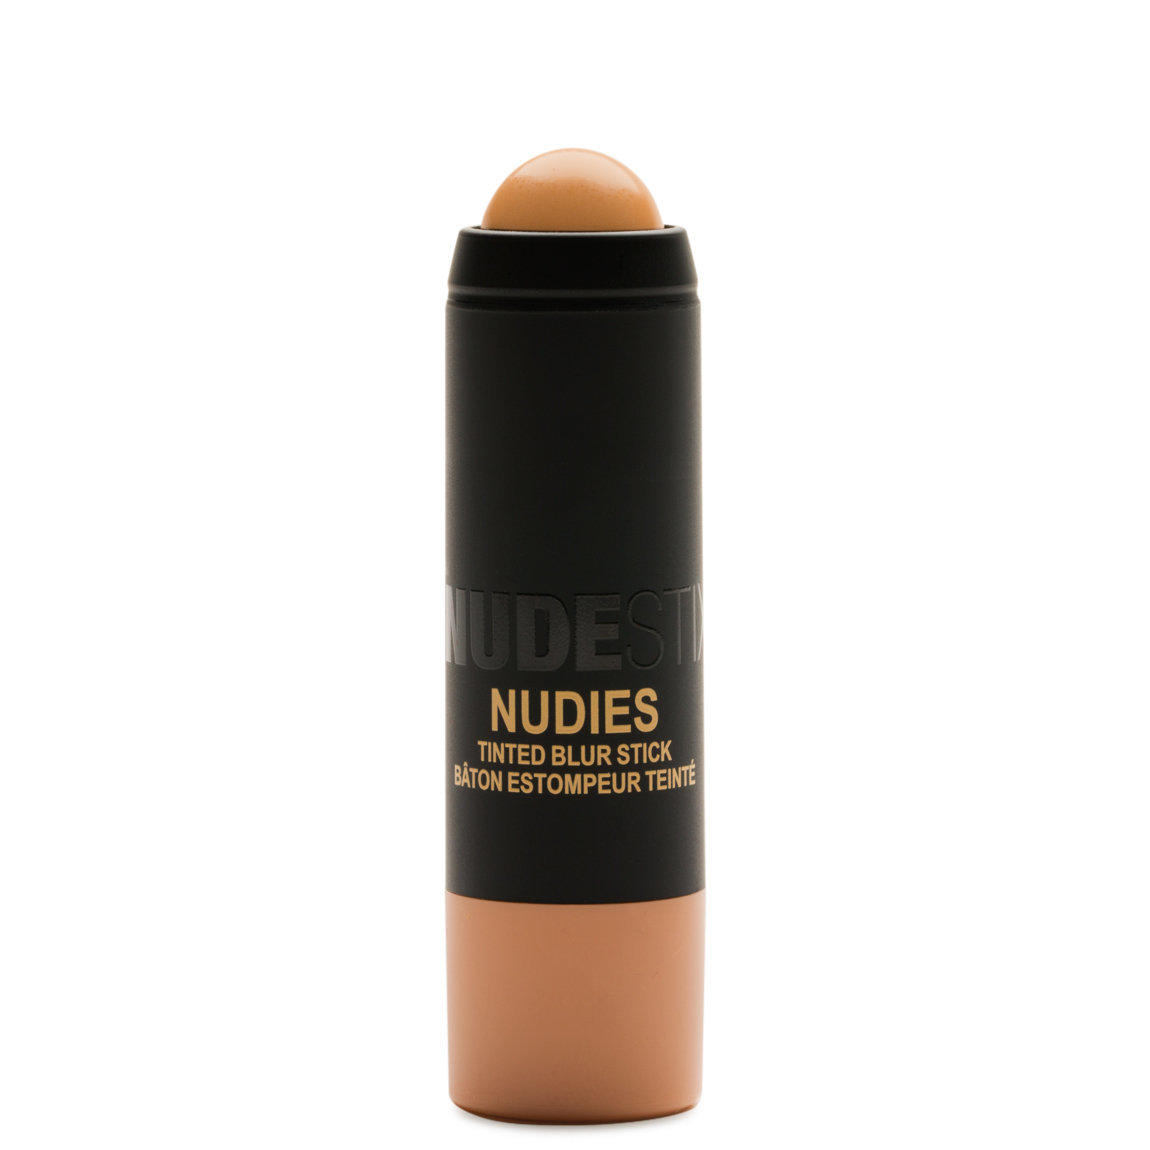 NudeStix Nudies Tinted Blur Stick Light 1